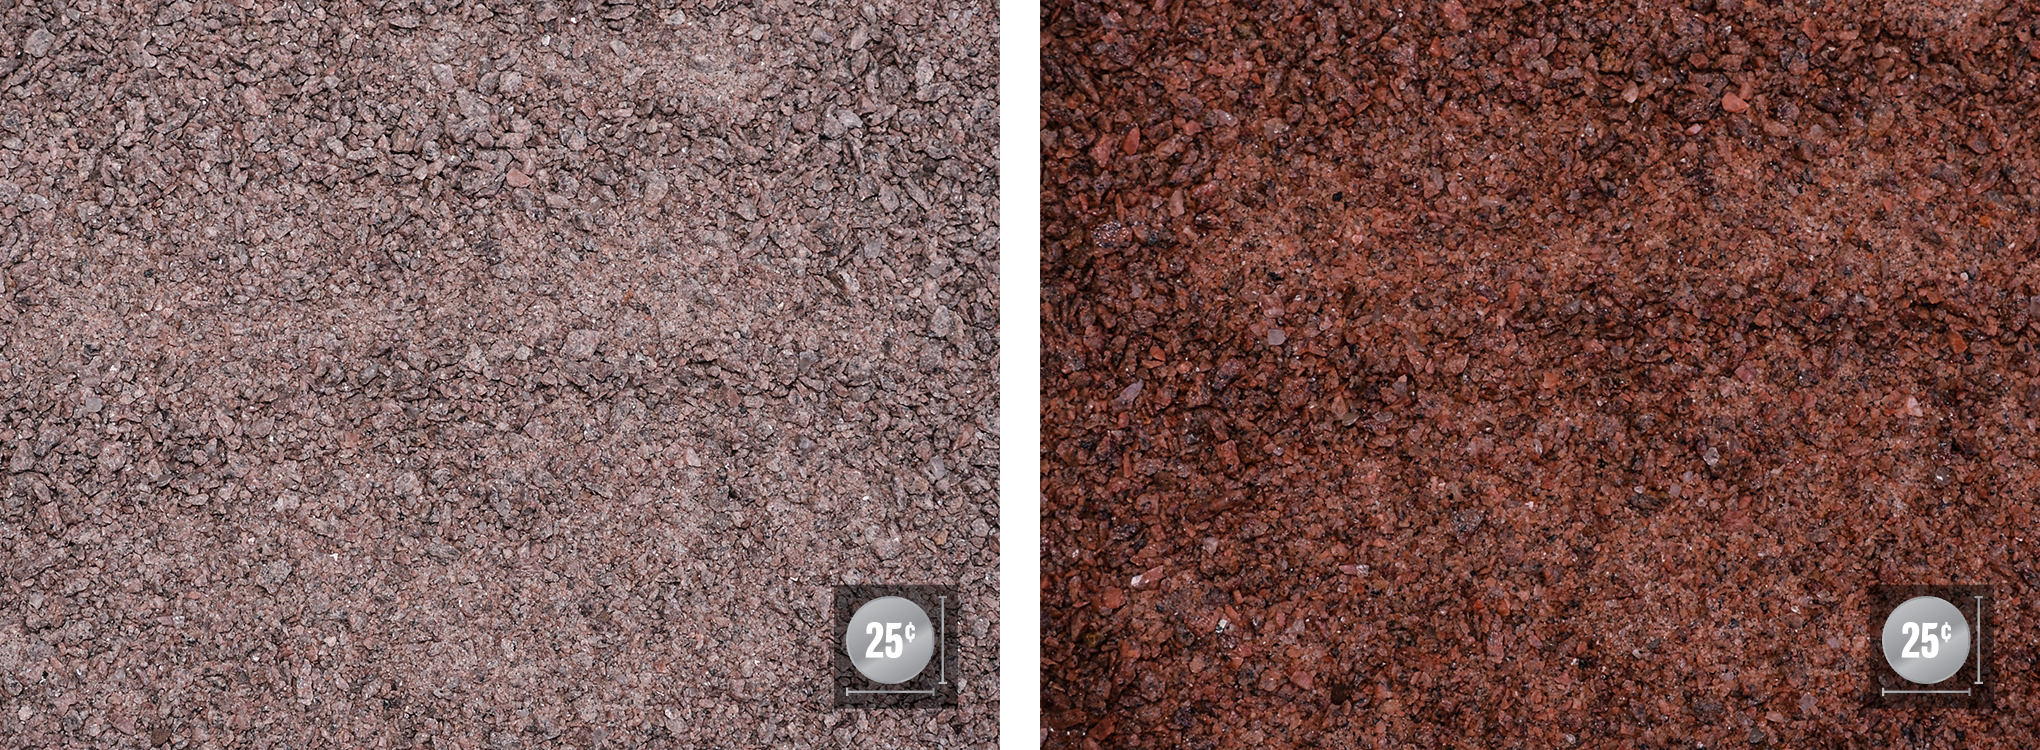 1/4" minus (6mm minus) (Left: Dry, Right: Wet)